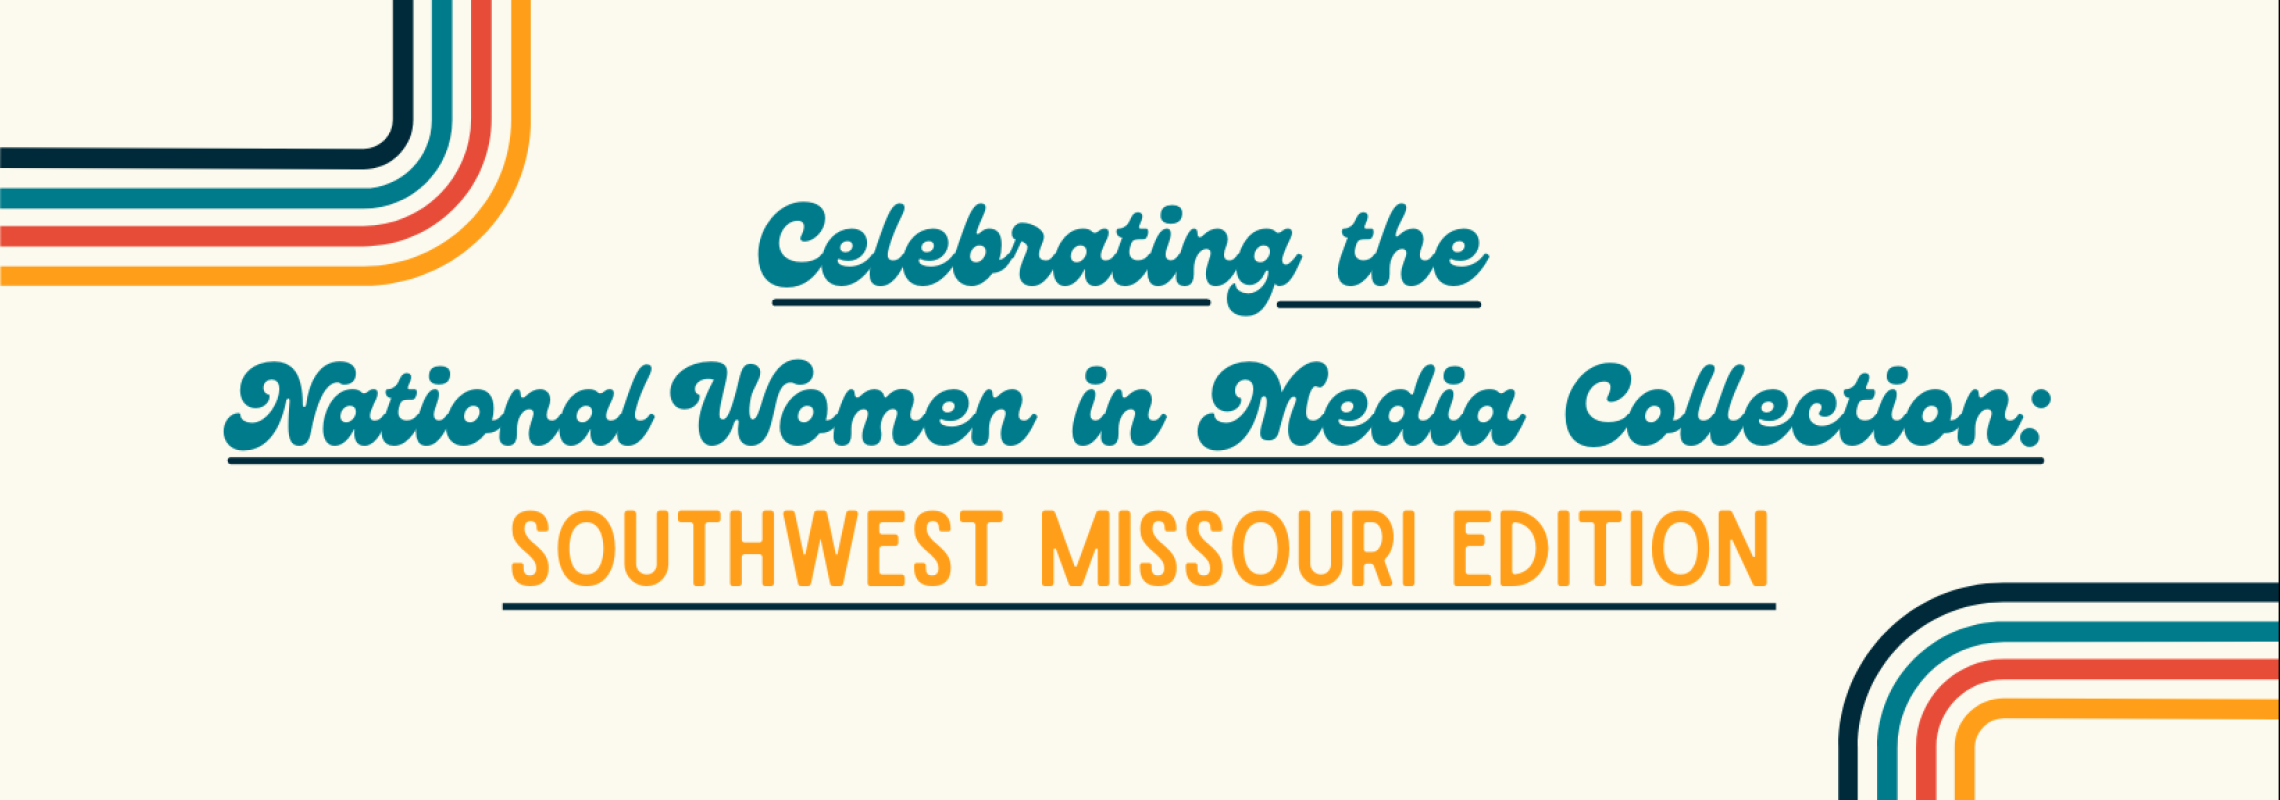 Celebrating National Women and Media Collection Southwest Missouri Edition